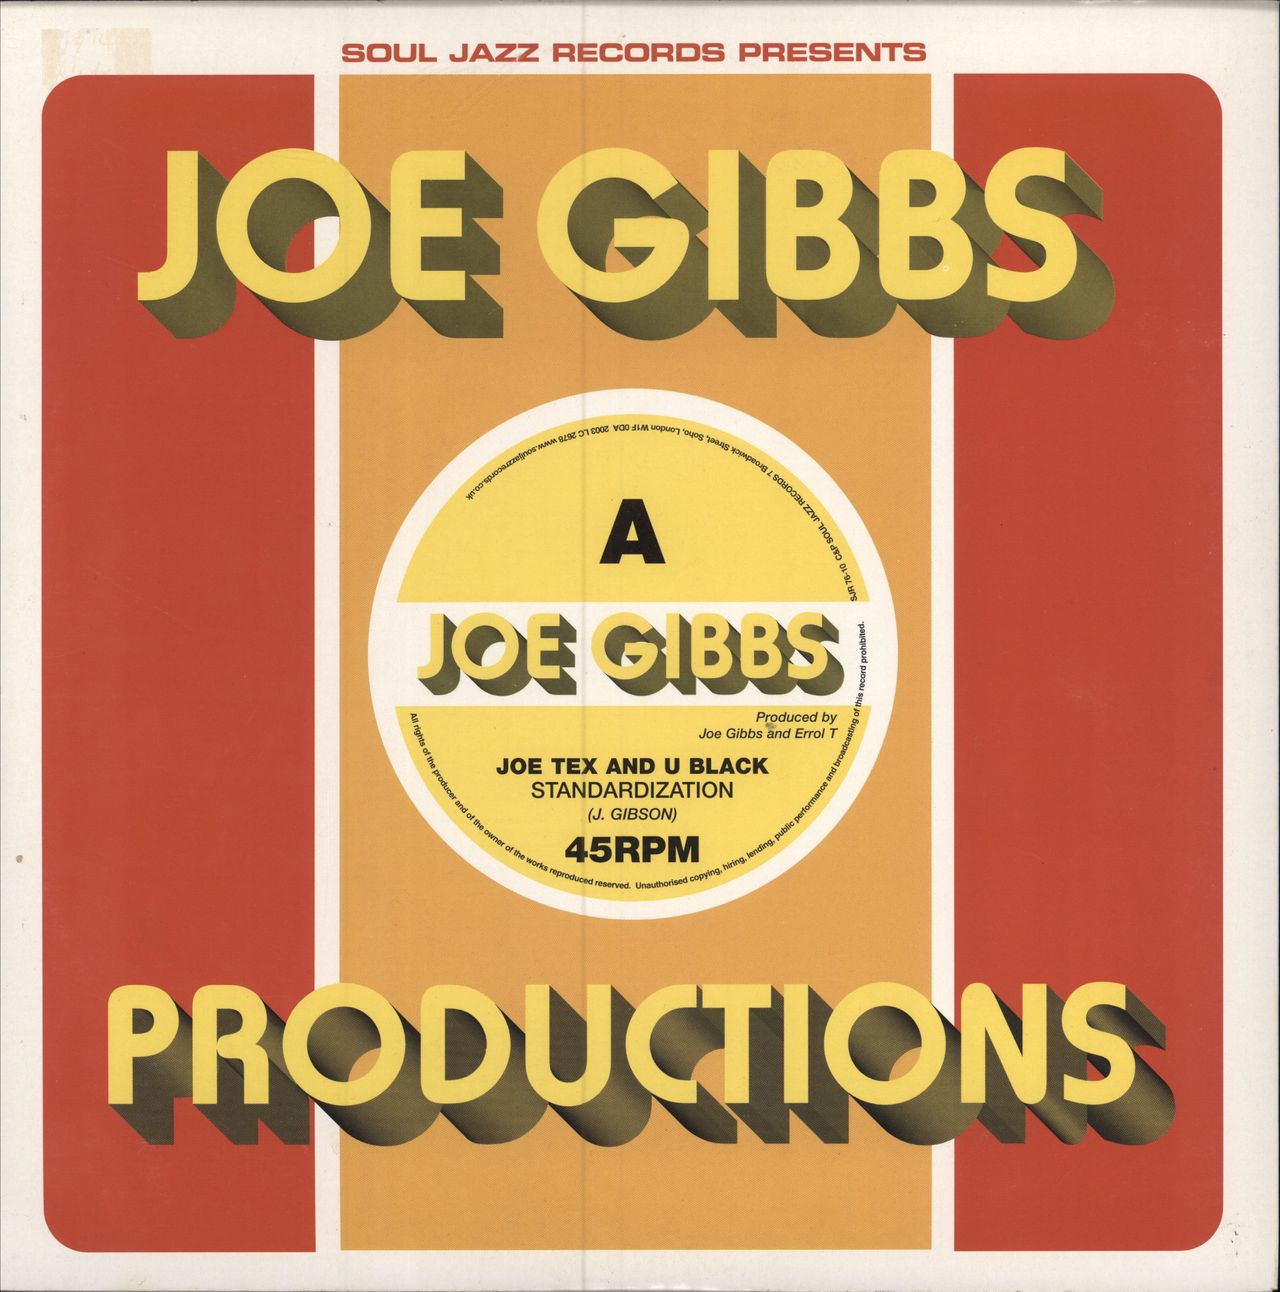 Joe Tex Standardization / Colour TV UK 10" vinyl single (10 inch record) SJR 076-10